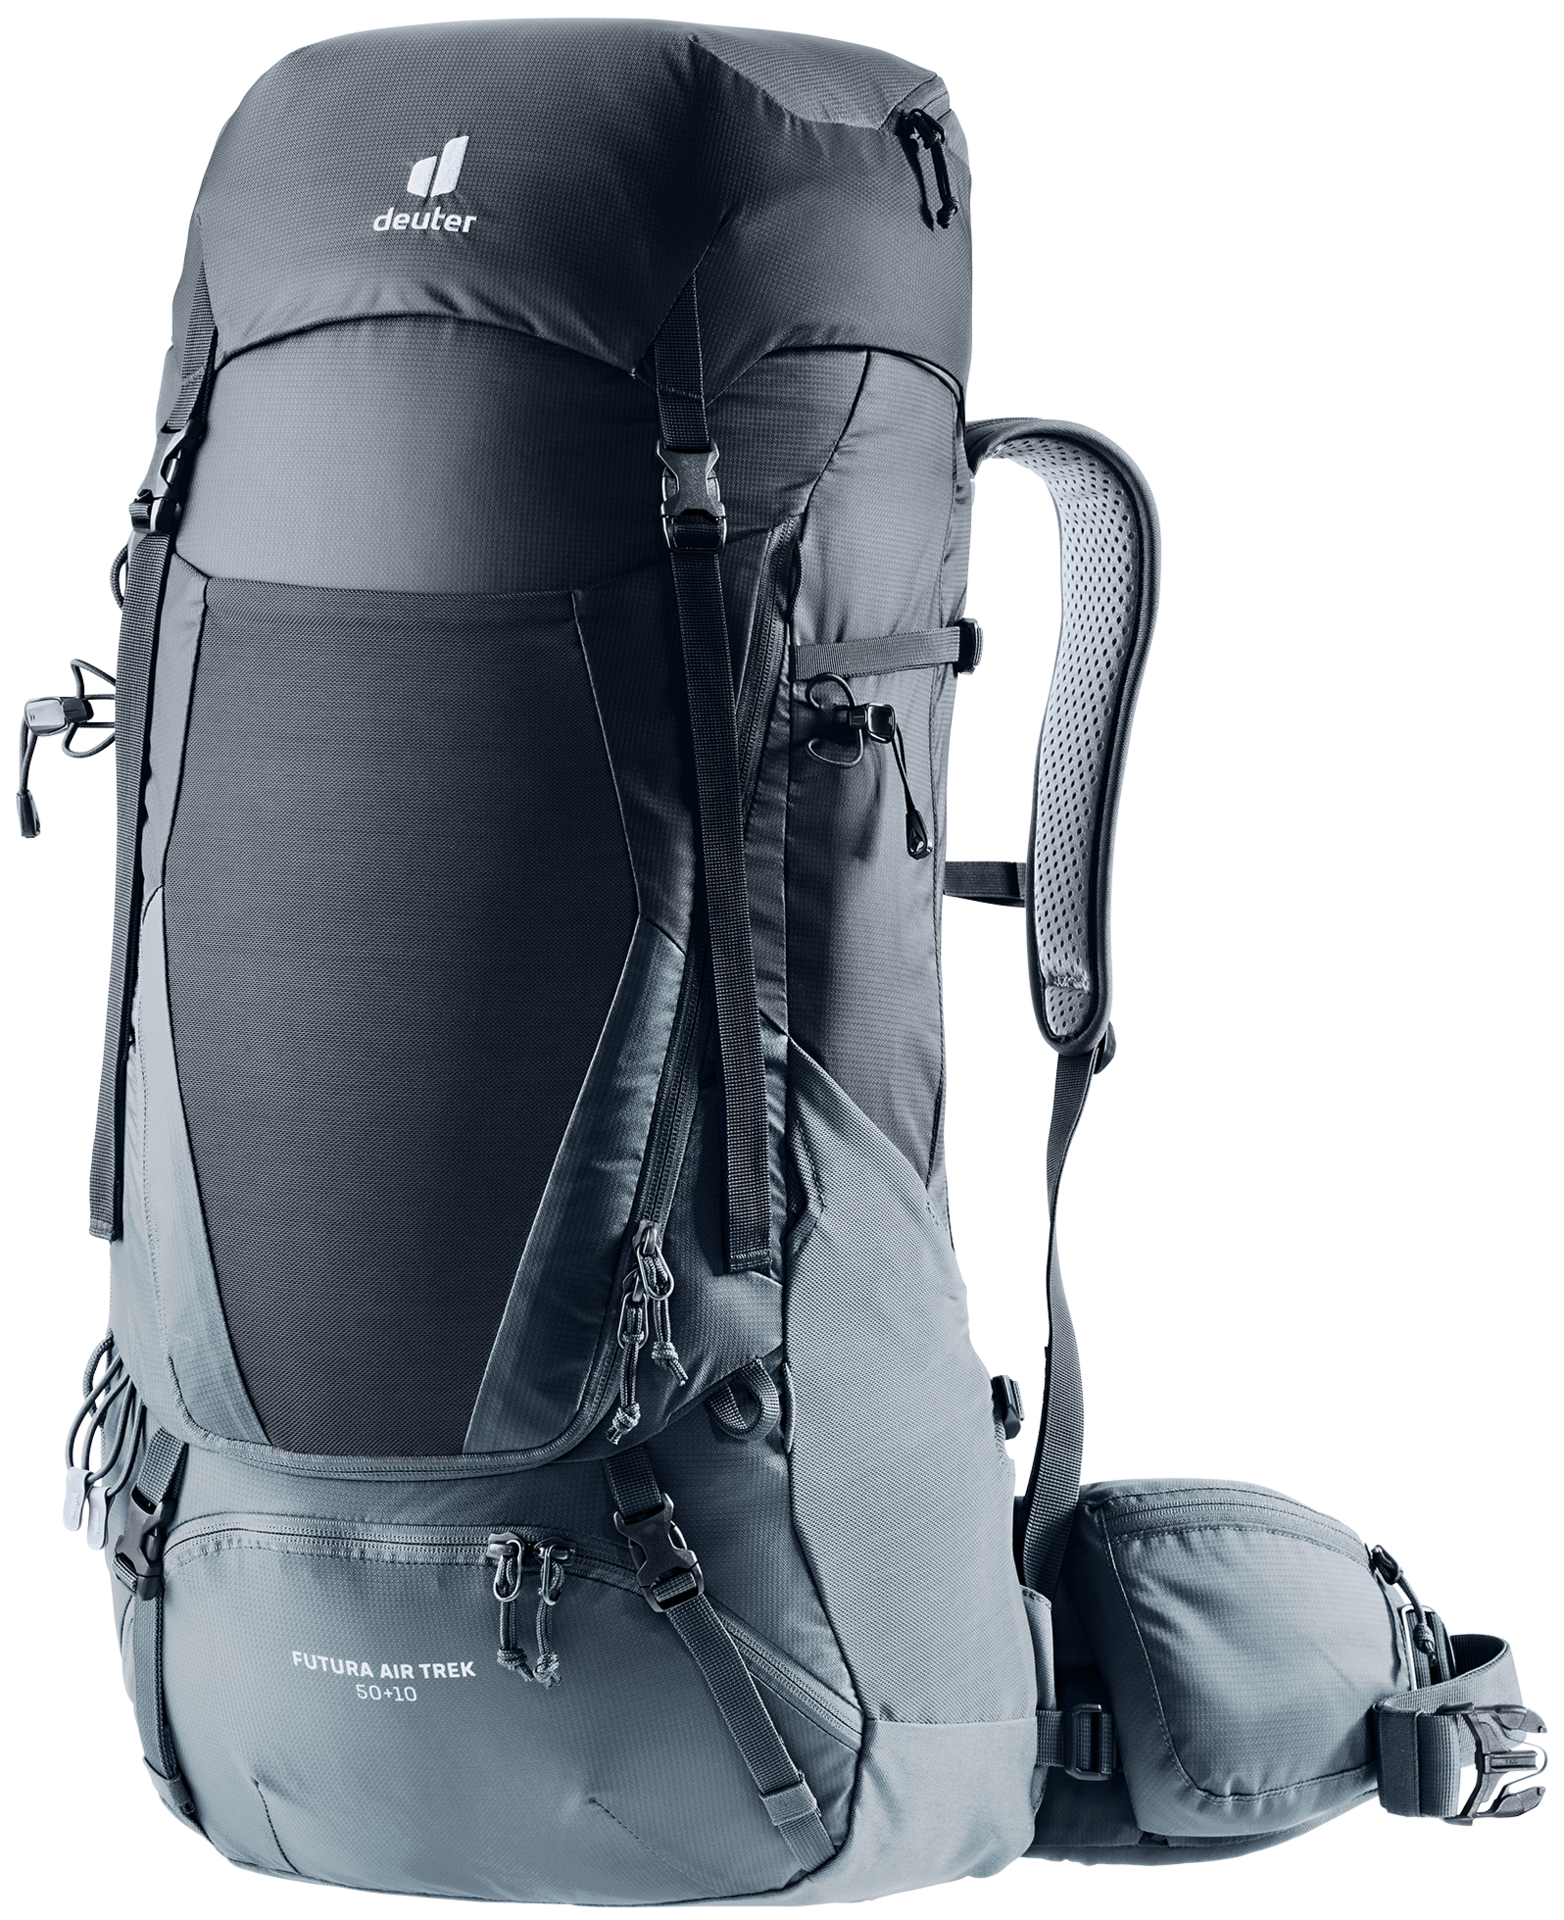 Air | Trekking deuter Futura 50+10 Trek backpack